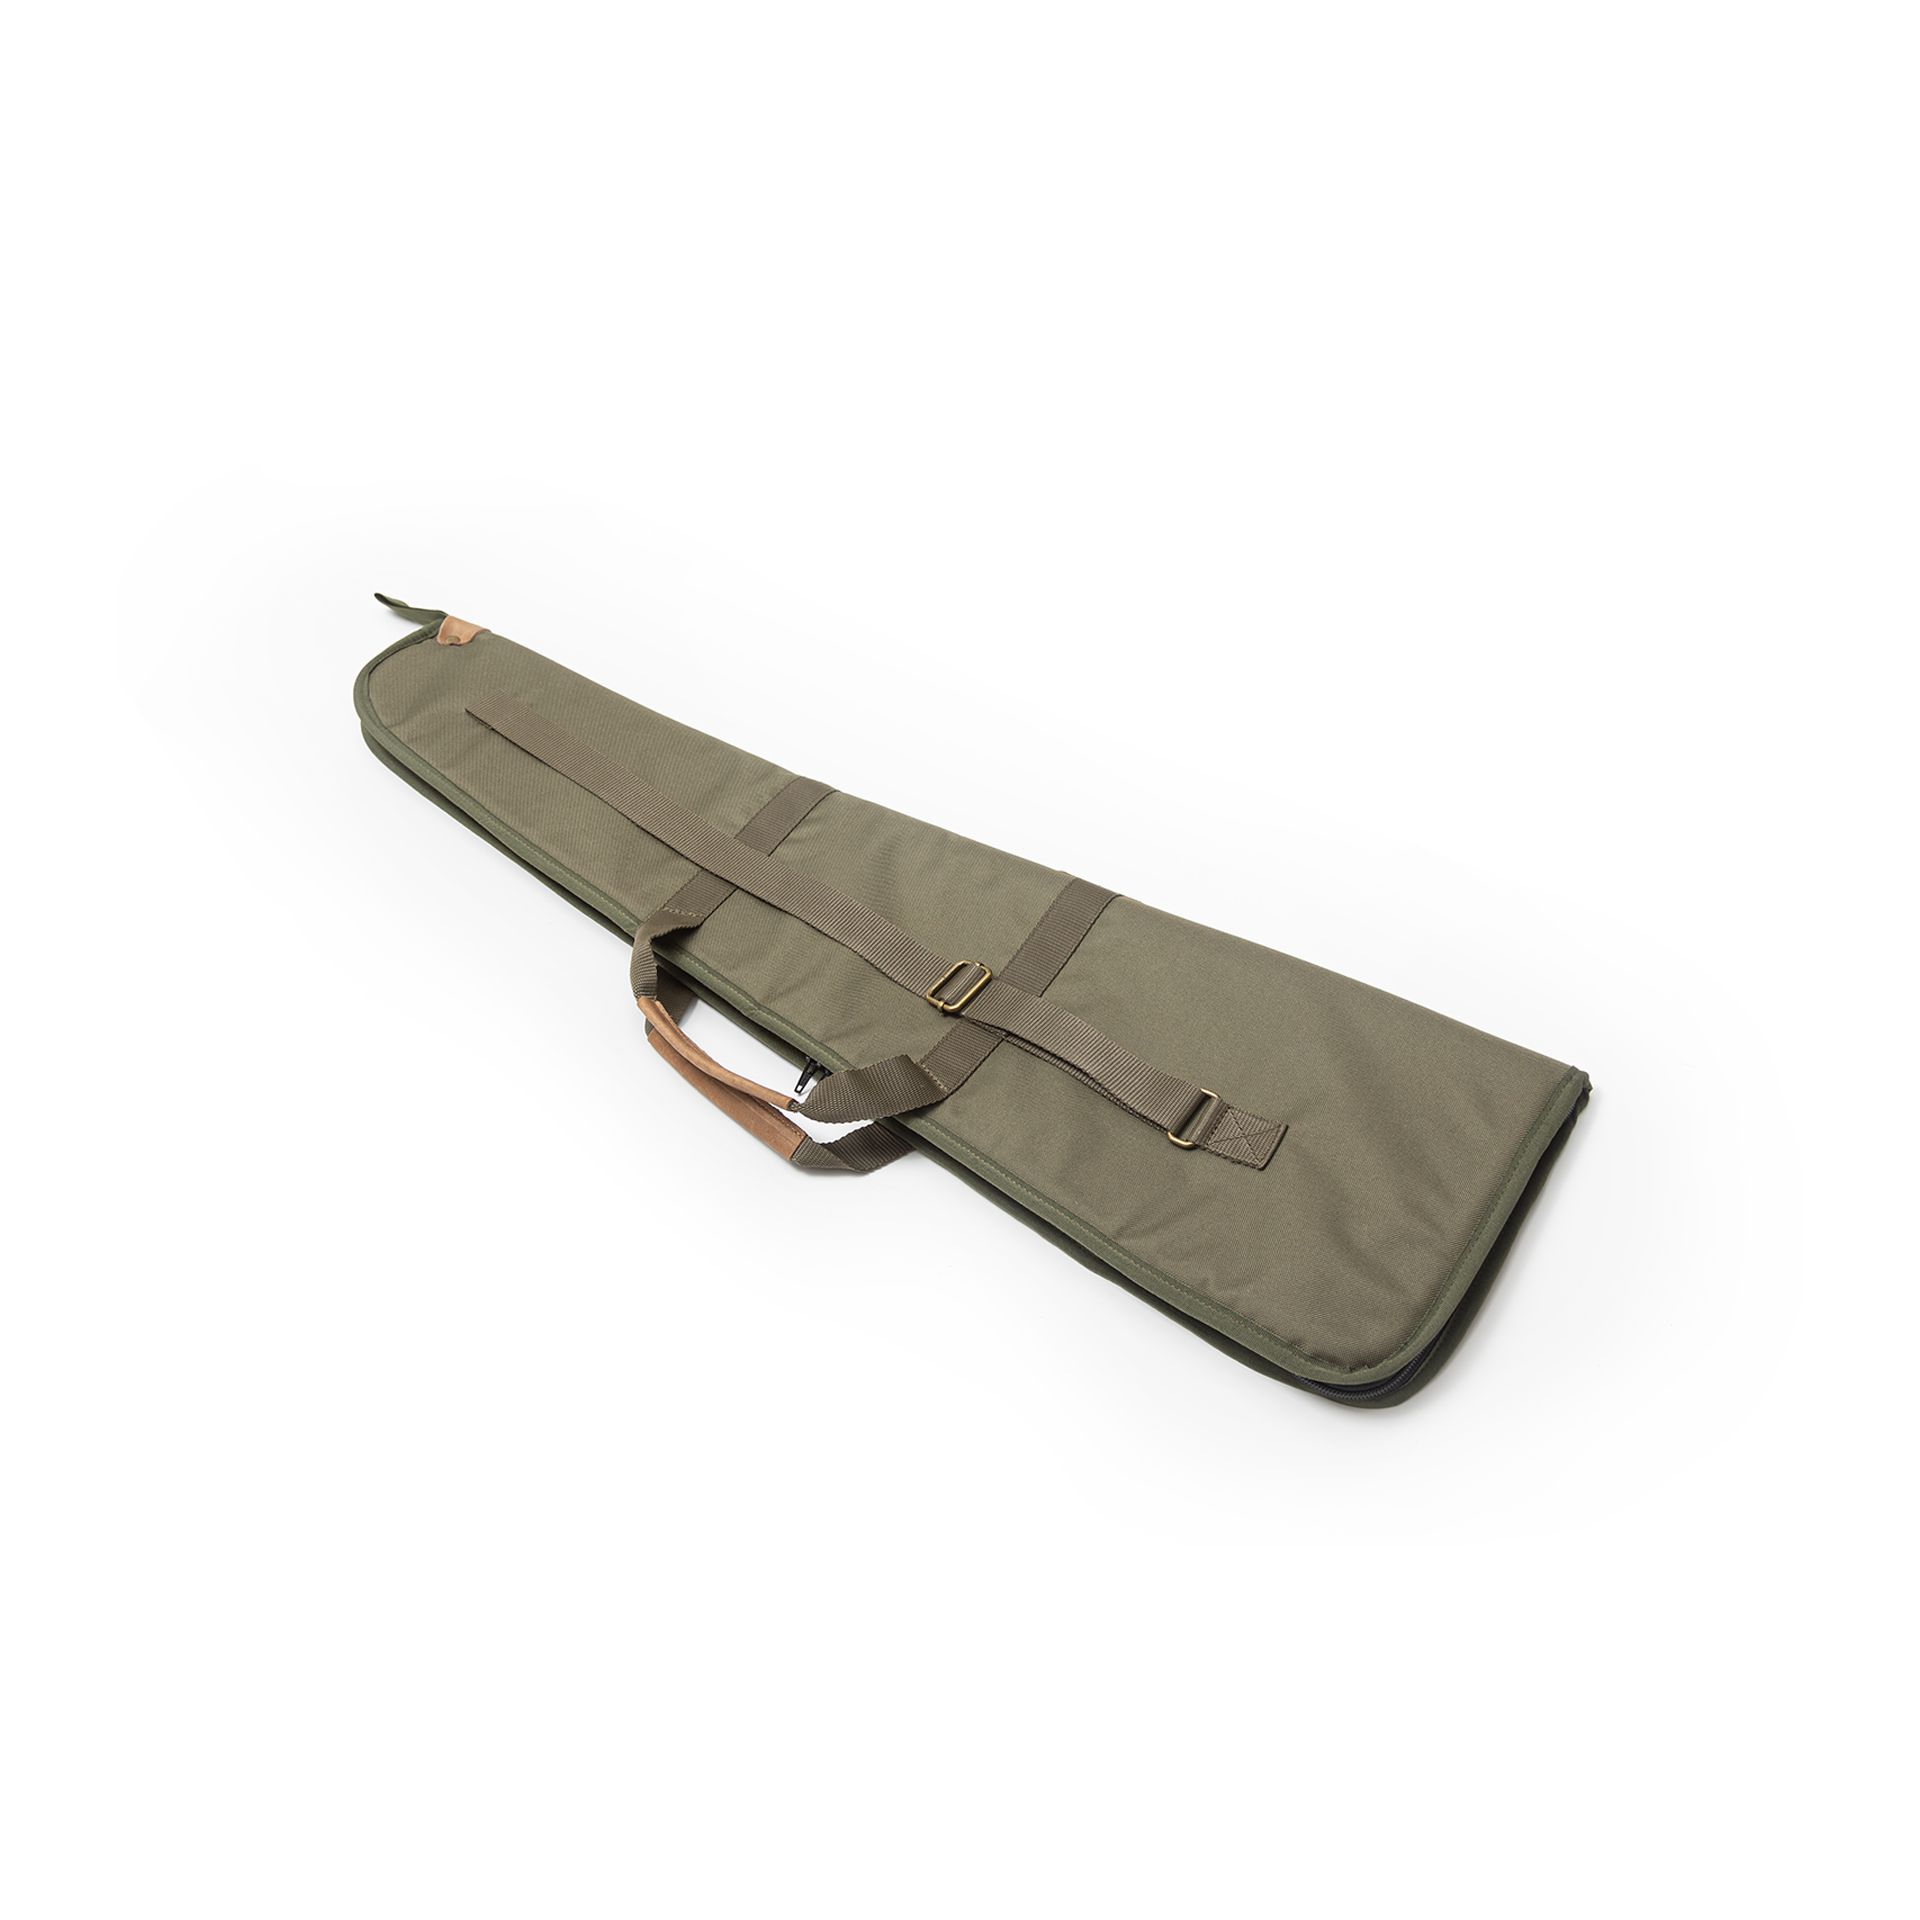 Dismountable rifle cover – 32456-02